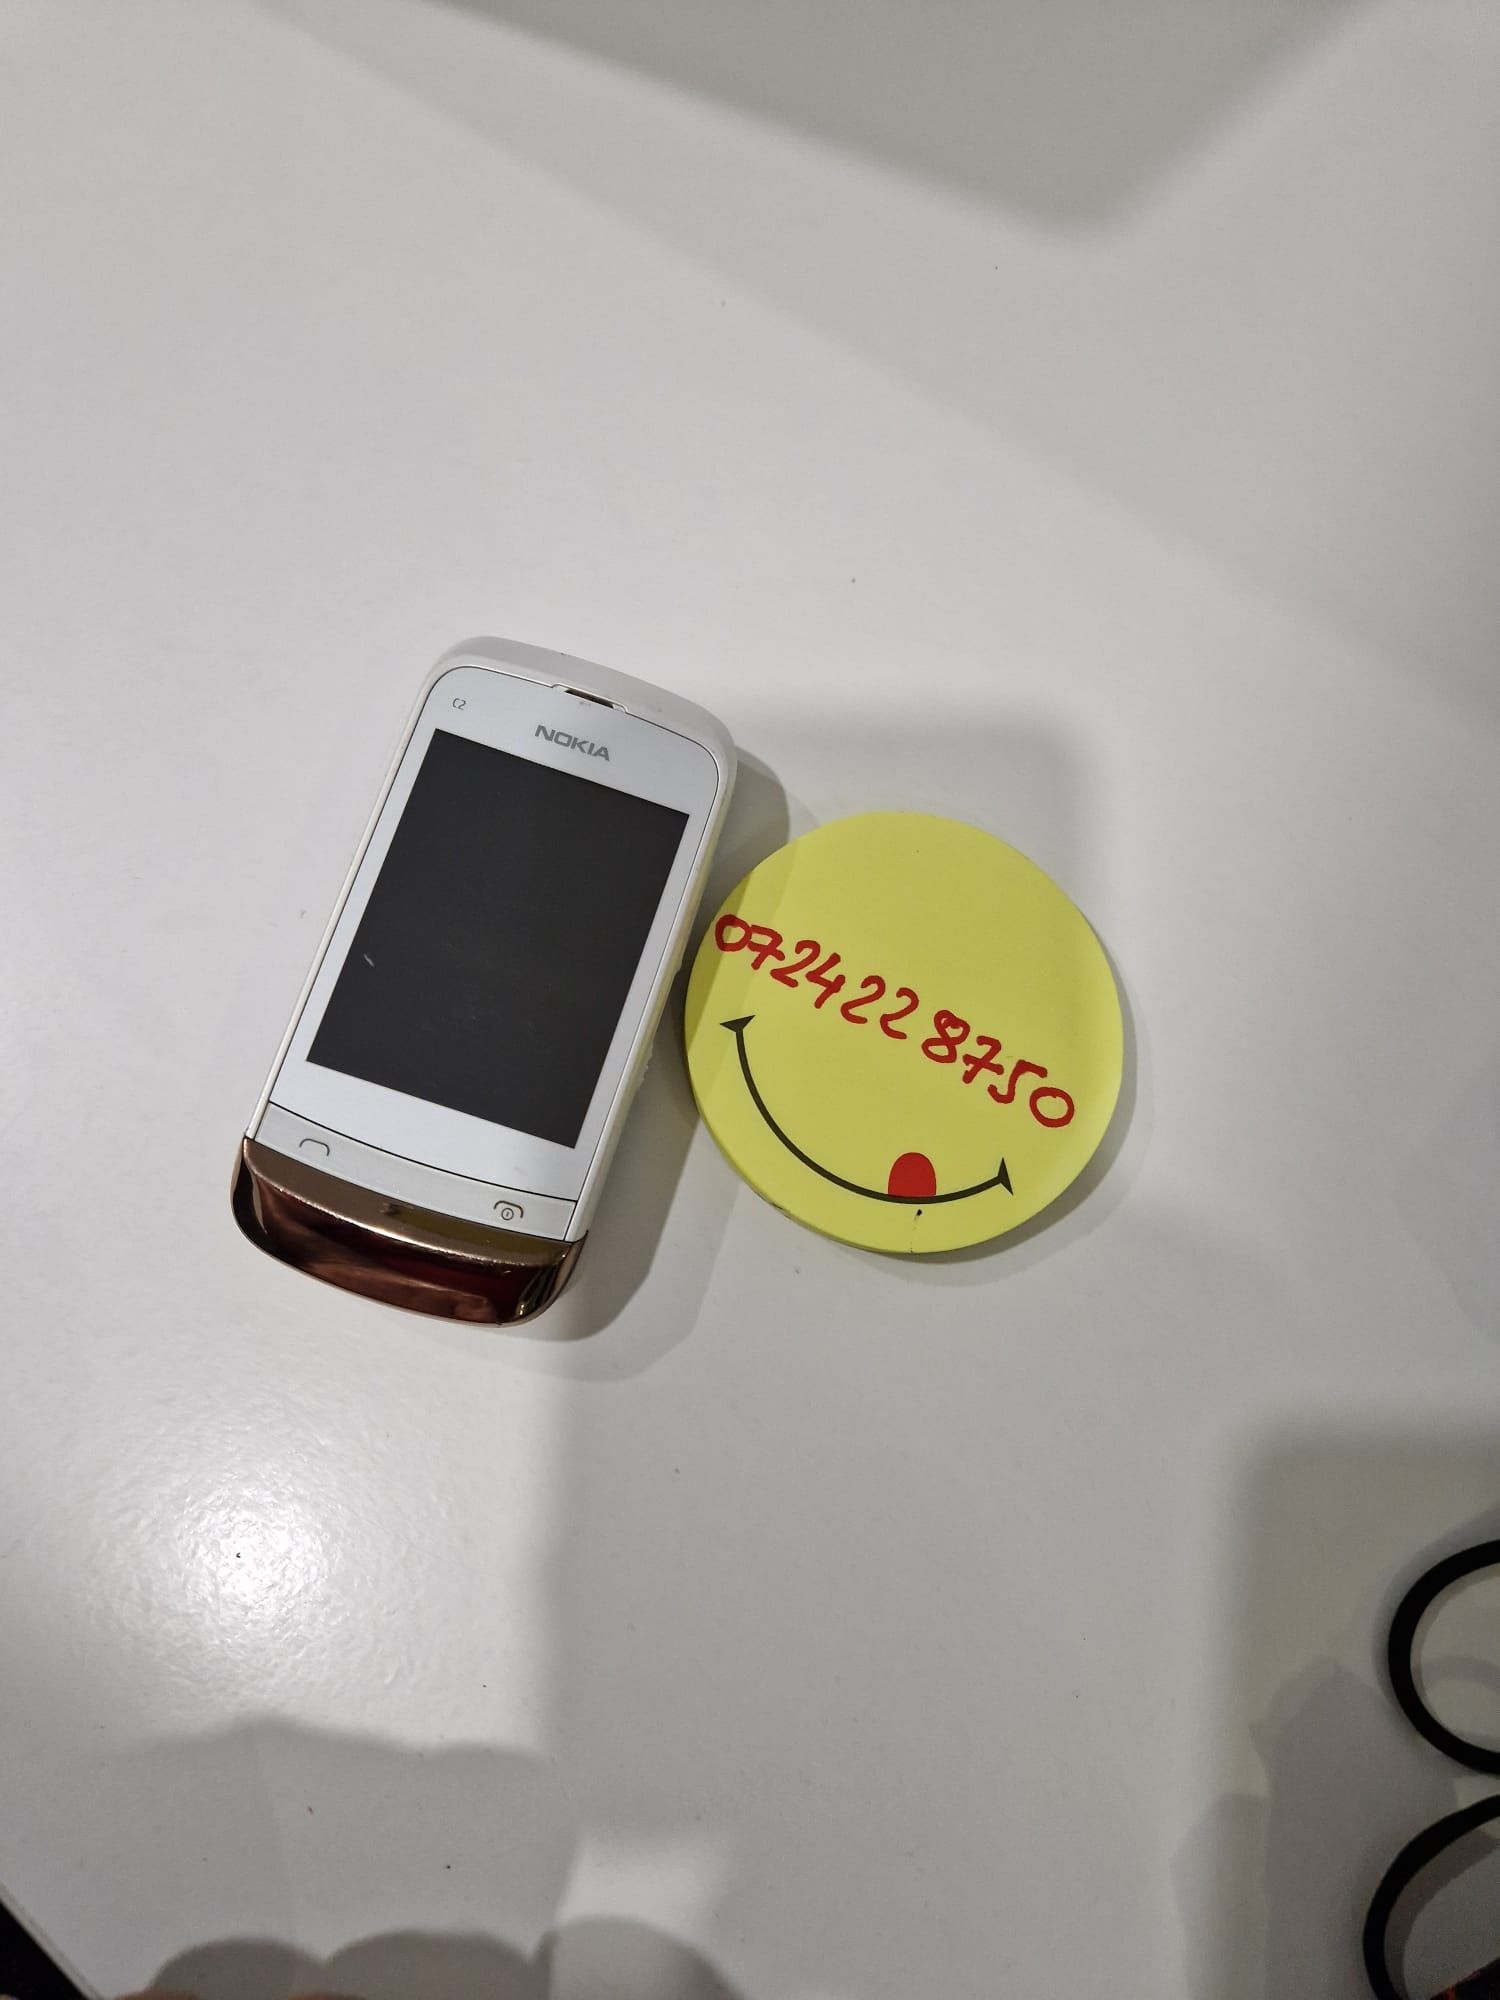 Telefon pe sina (Slide) - Nokia dual Sim